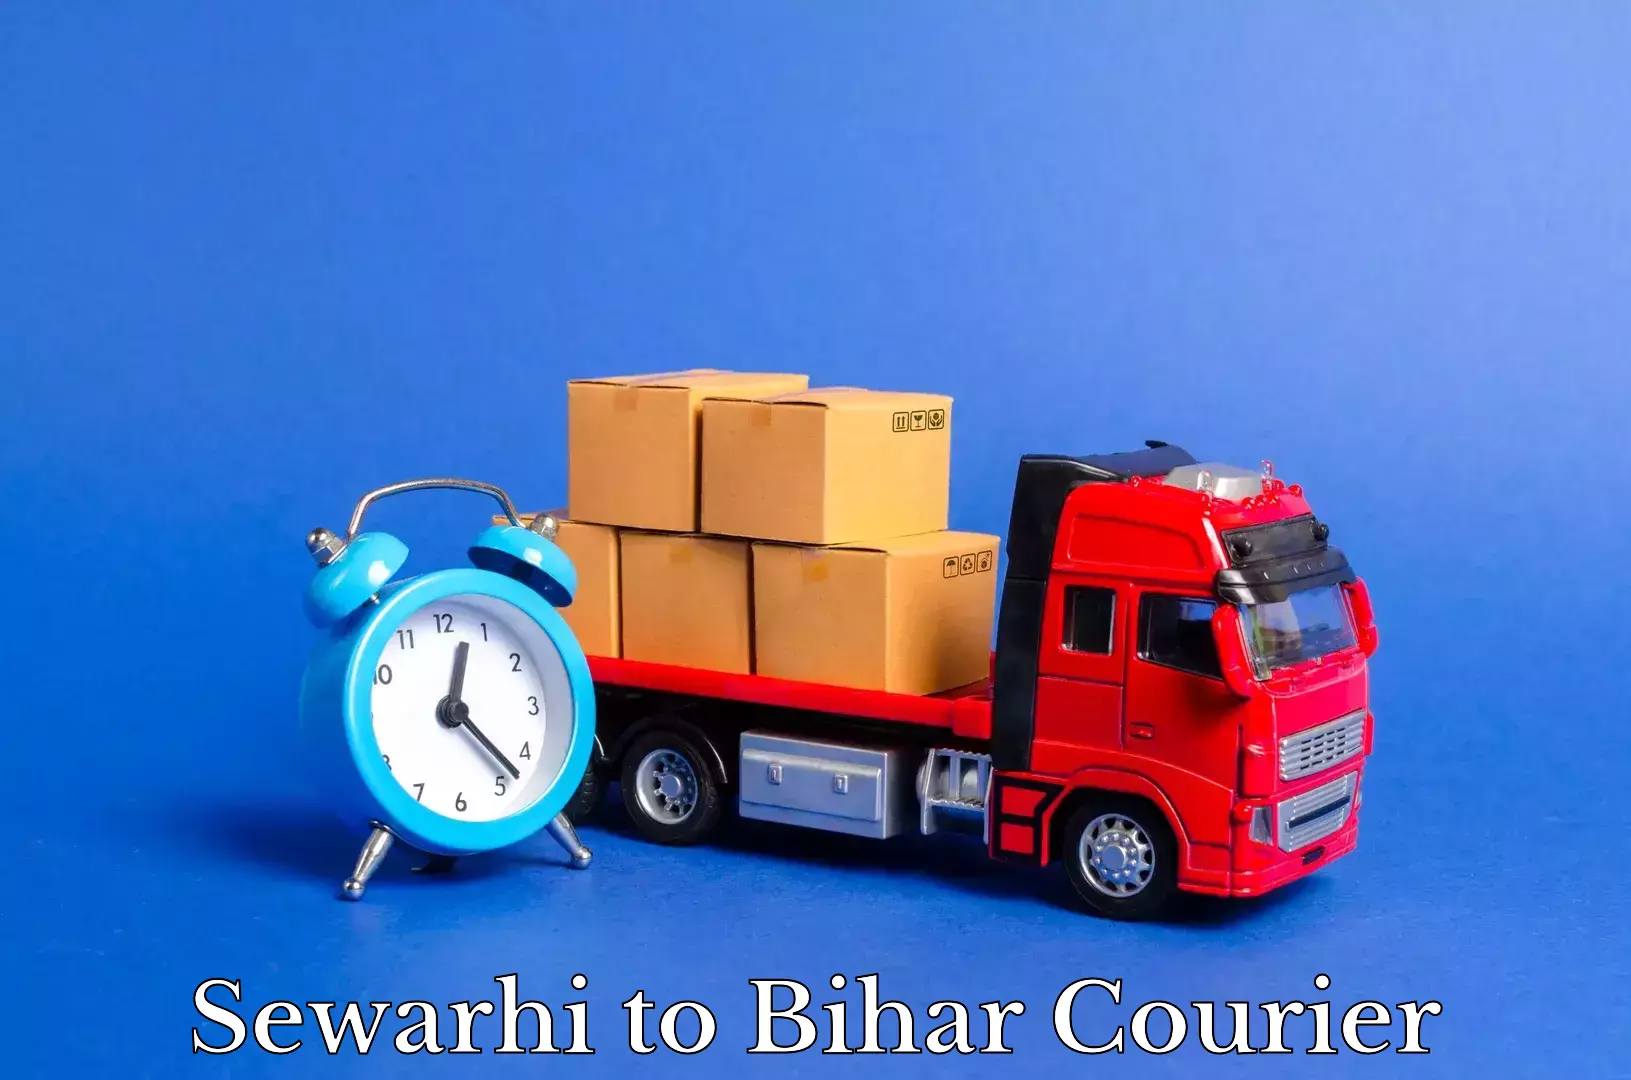 Moving and packing experts Sewarhi to Bihar